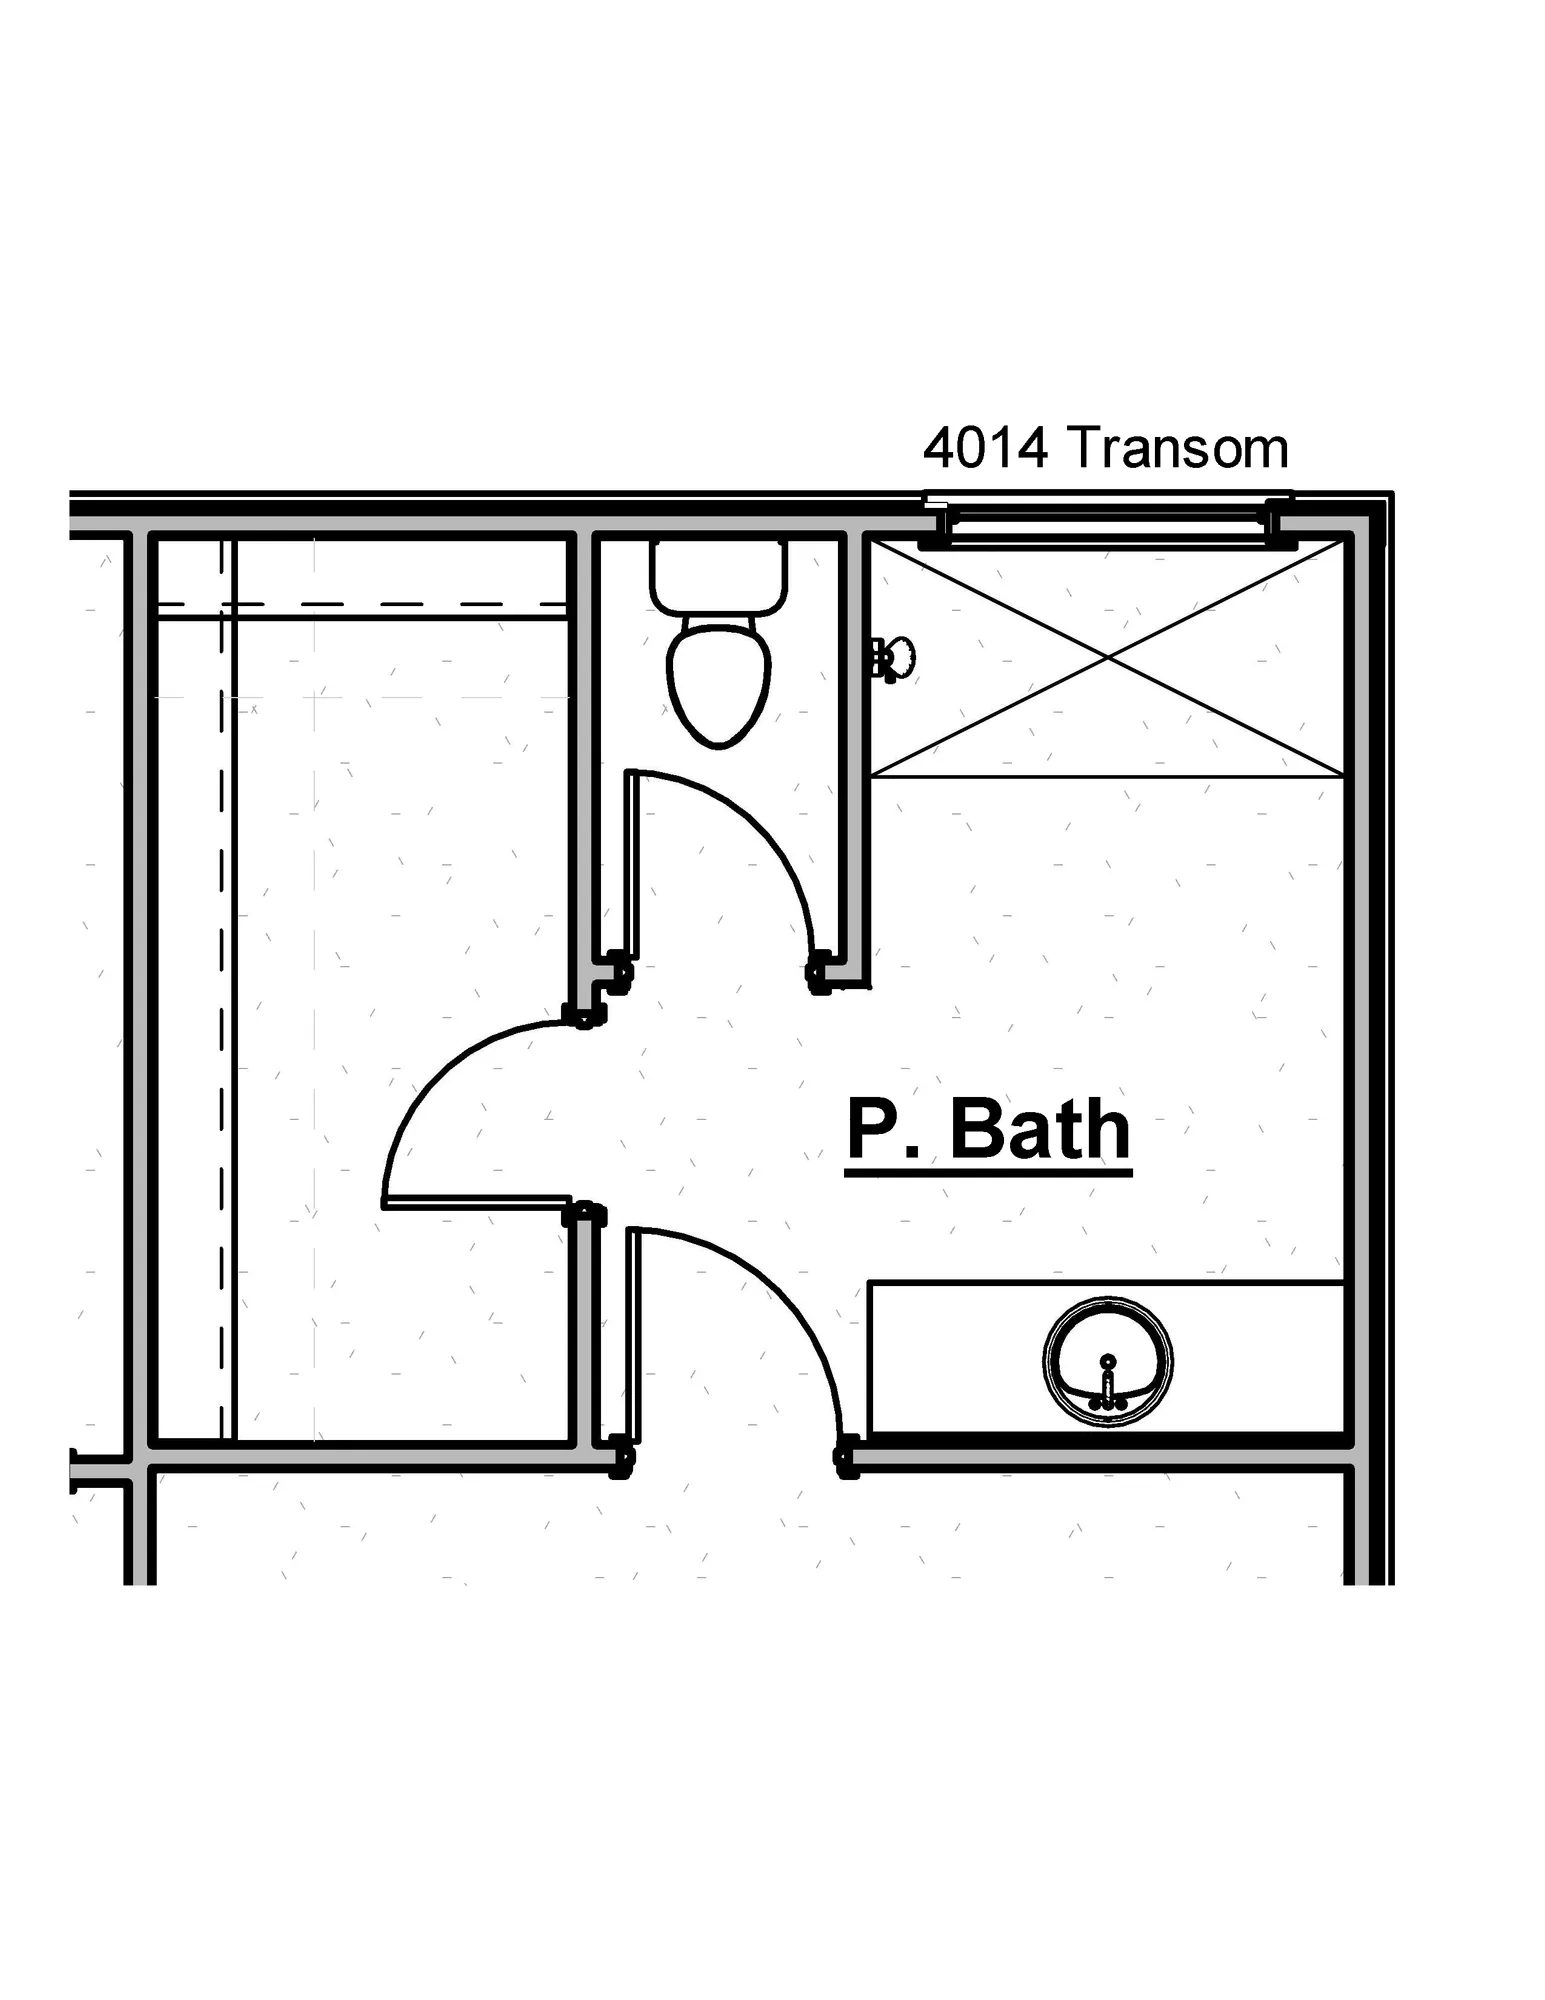 Primary Shower Transom Window - undefined